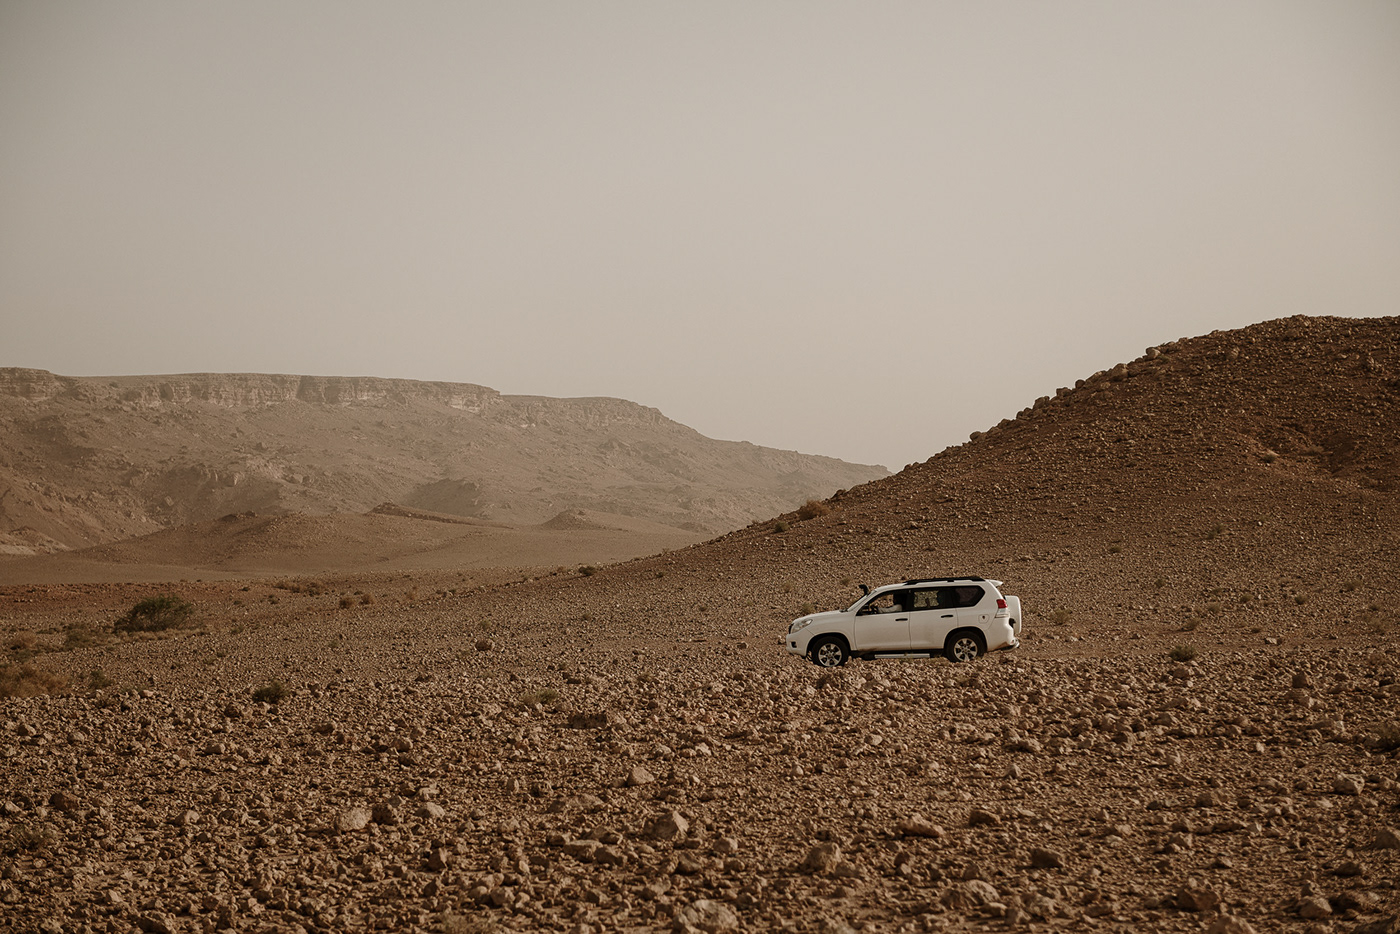 Driving thru the desert